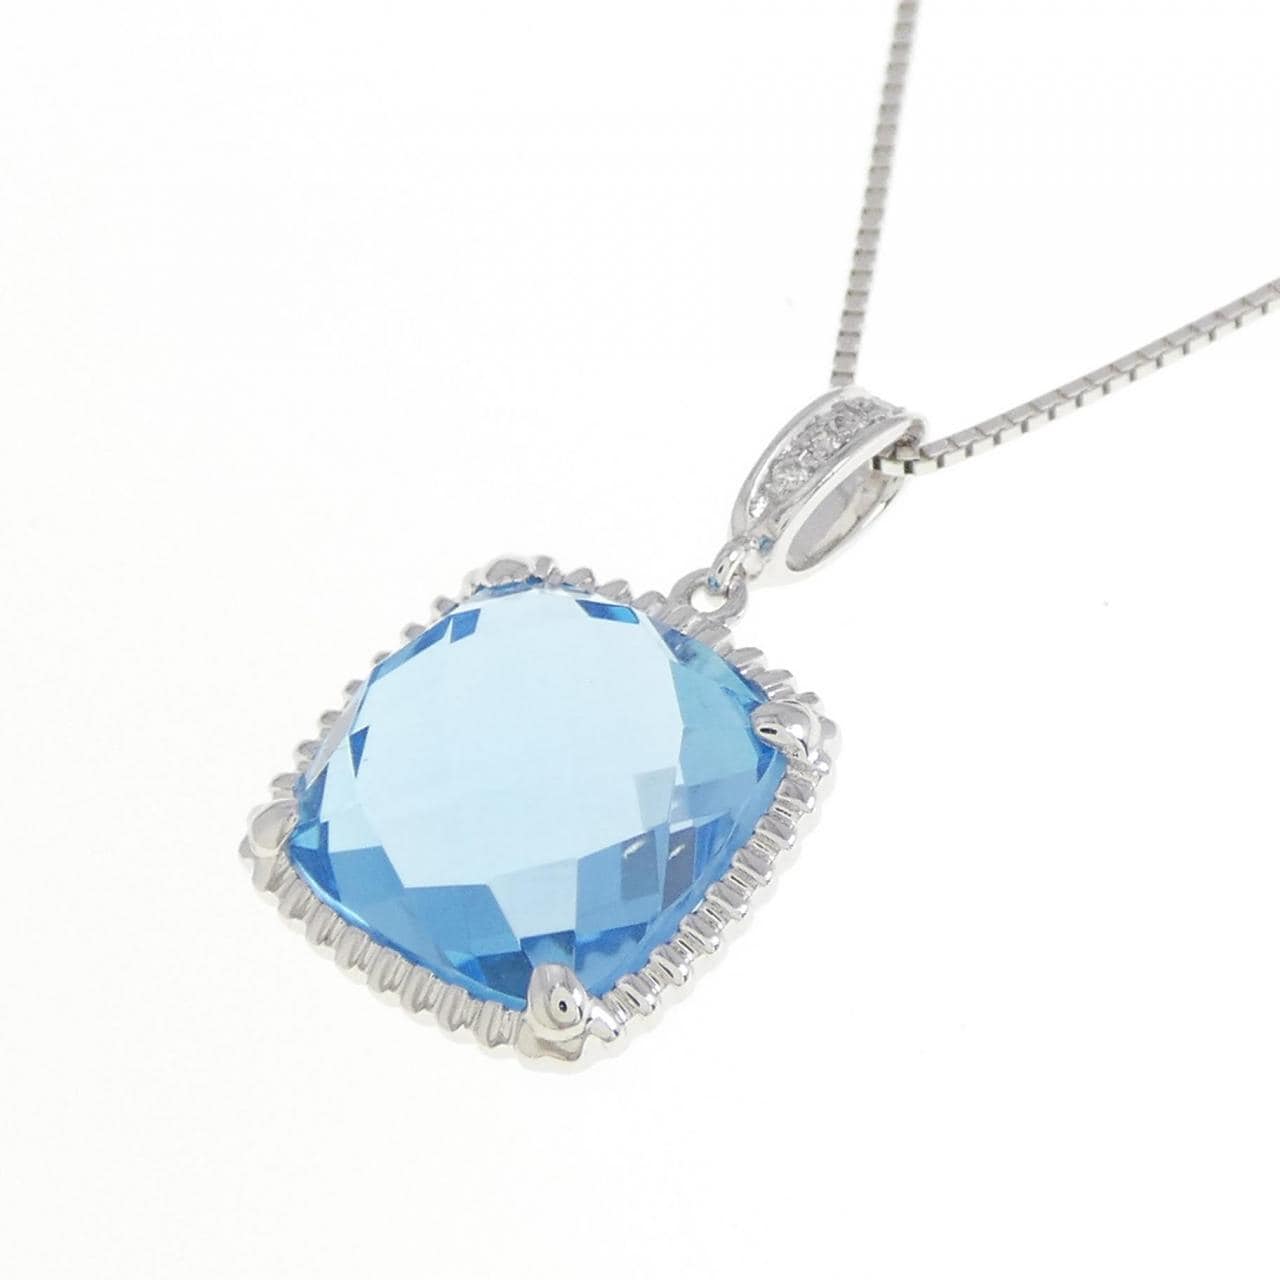 K18WG blue Topaz necklace 6.47CT